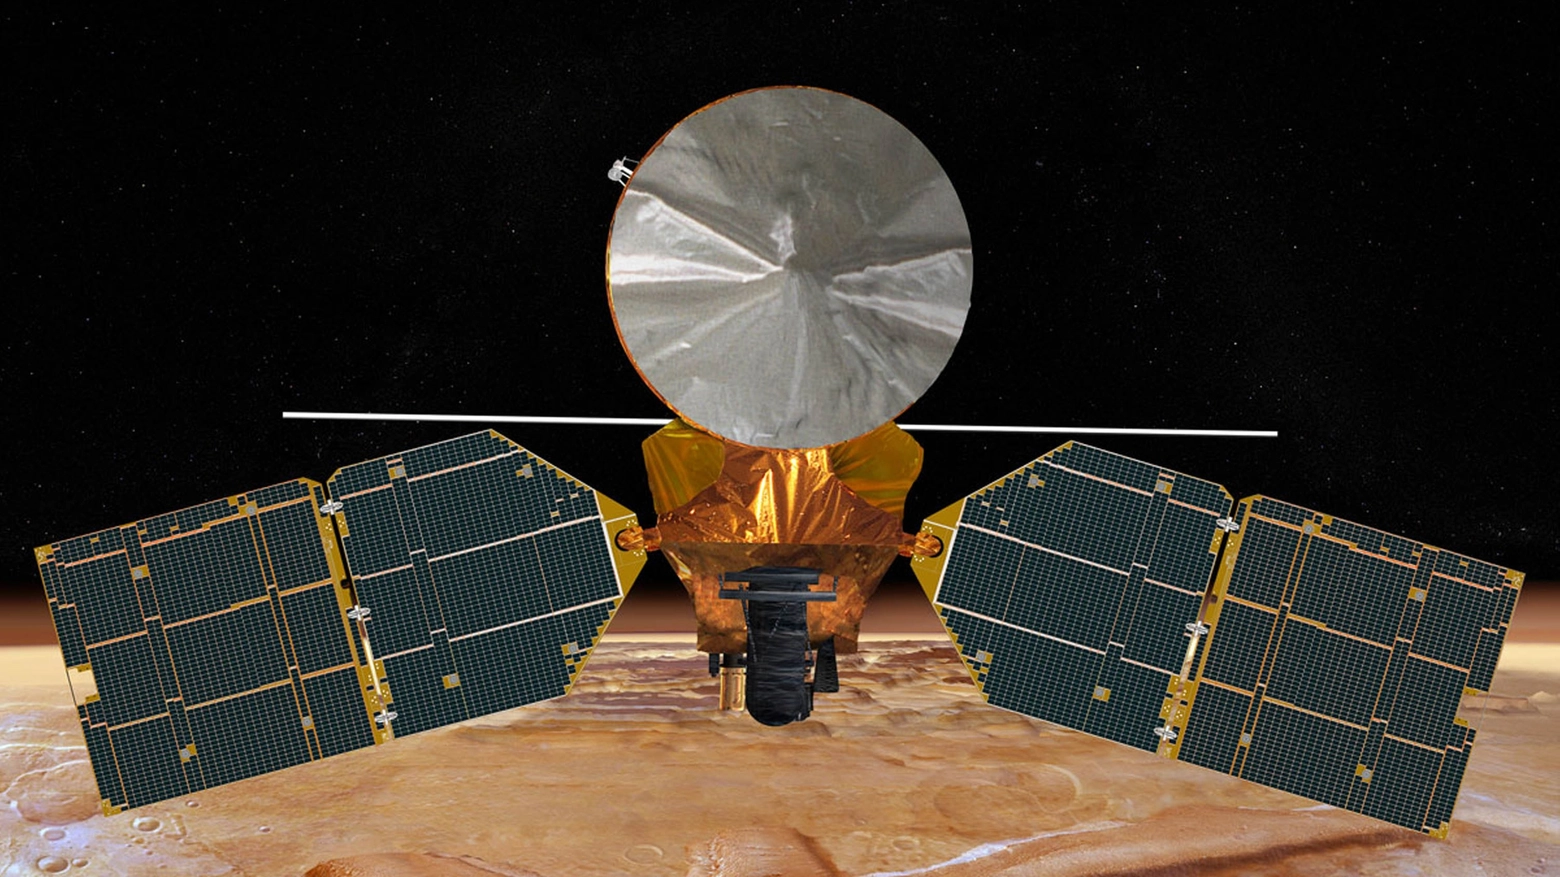 La sonda americana Mars Reconnaissance Orbiter